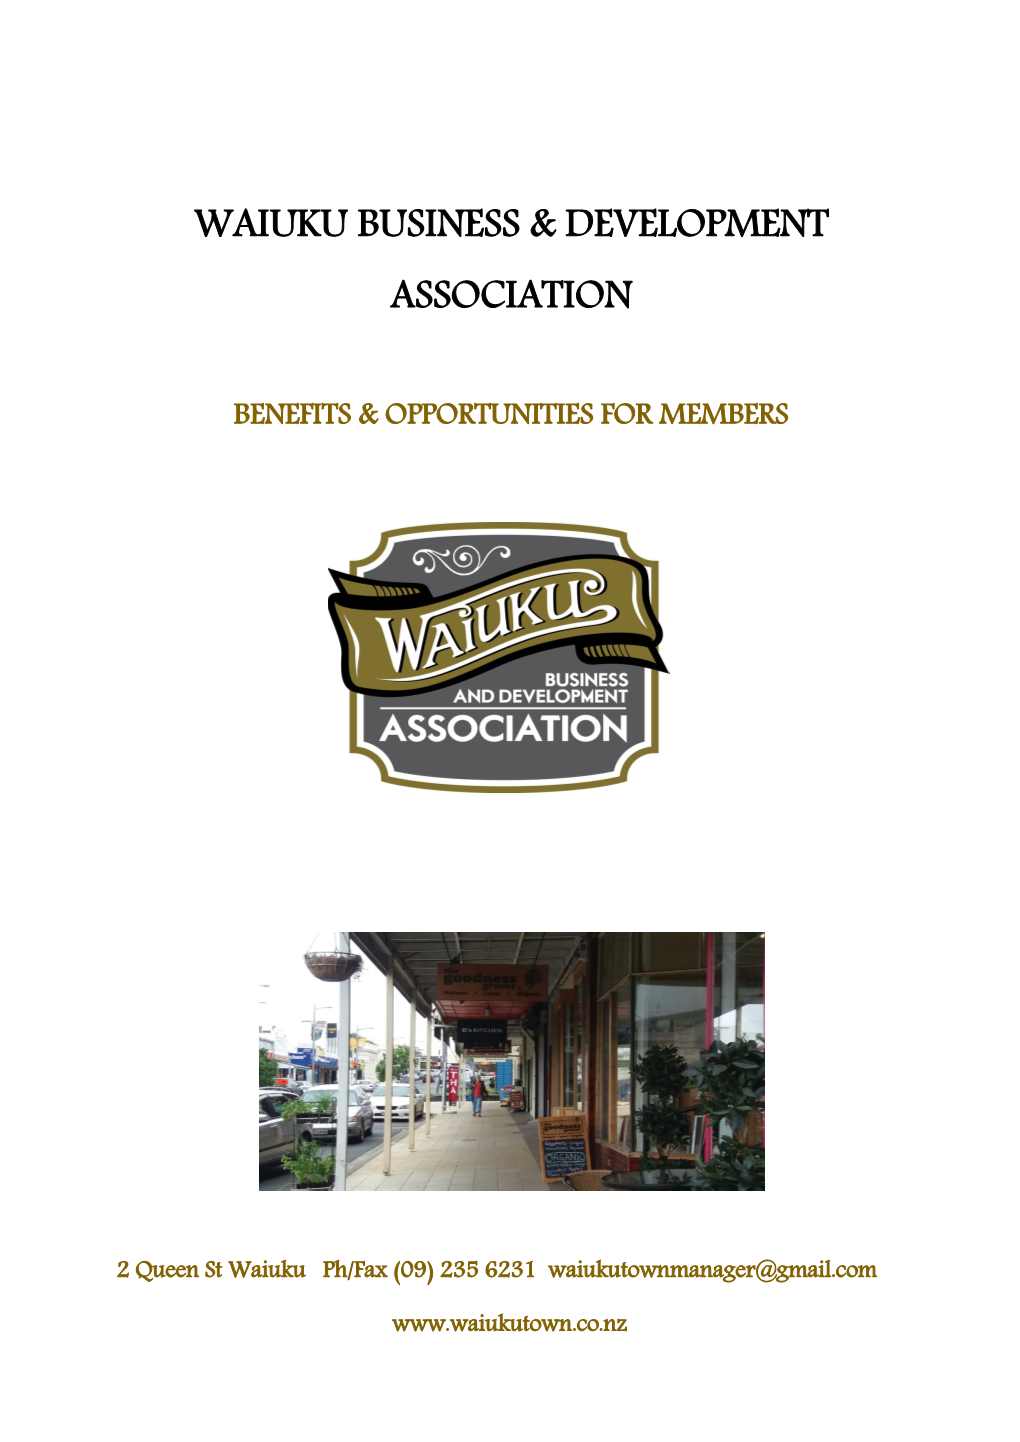 Waiuku Business & Development Association